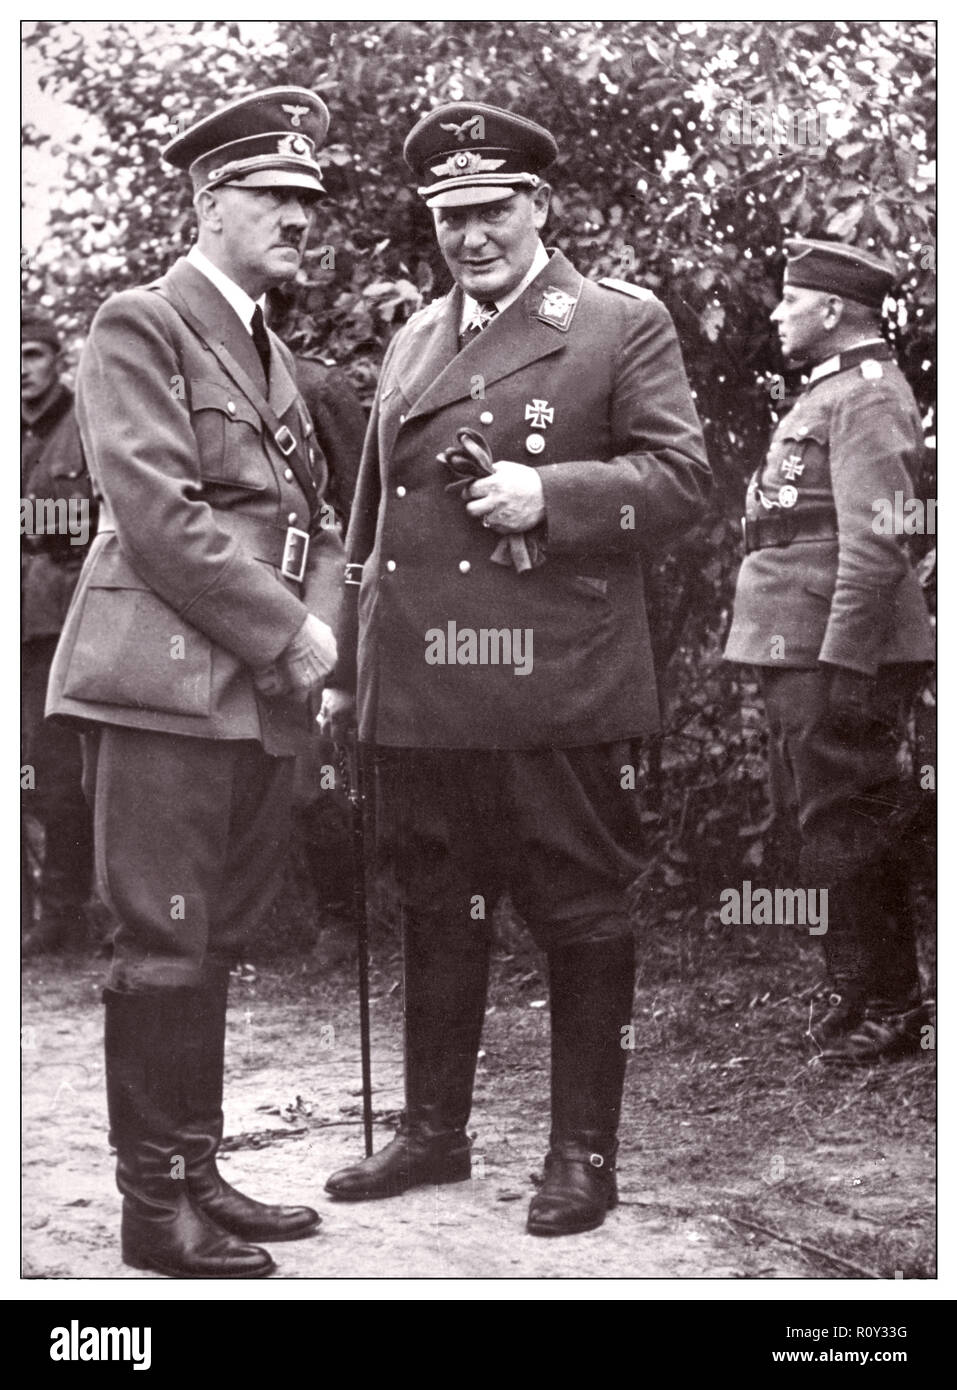 I leader nazisti della seconda guerra mondiale Adolf Hitler e Hermann Goering (Goring) in uniforme 1939 durante la seconda guerra mondiale Foto Stock